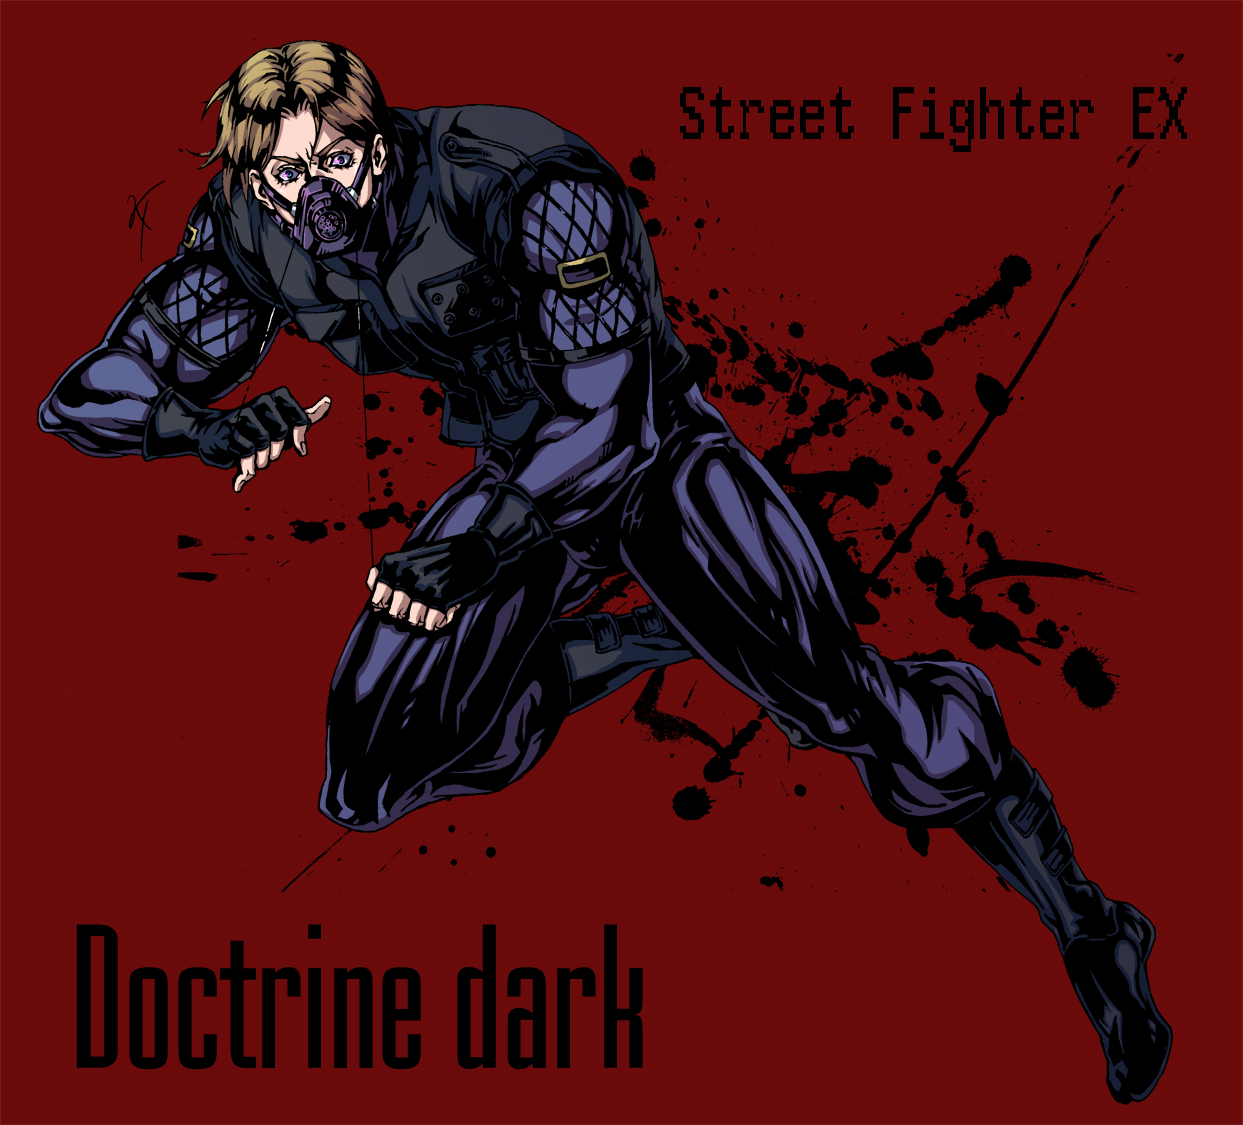 Doctrine Dark